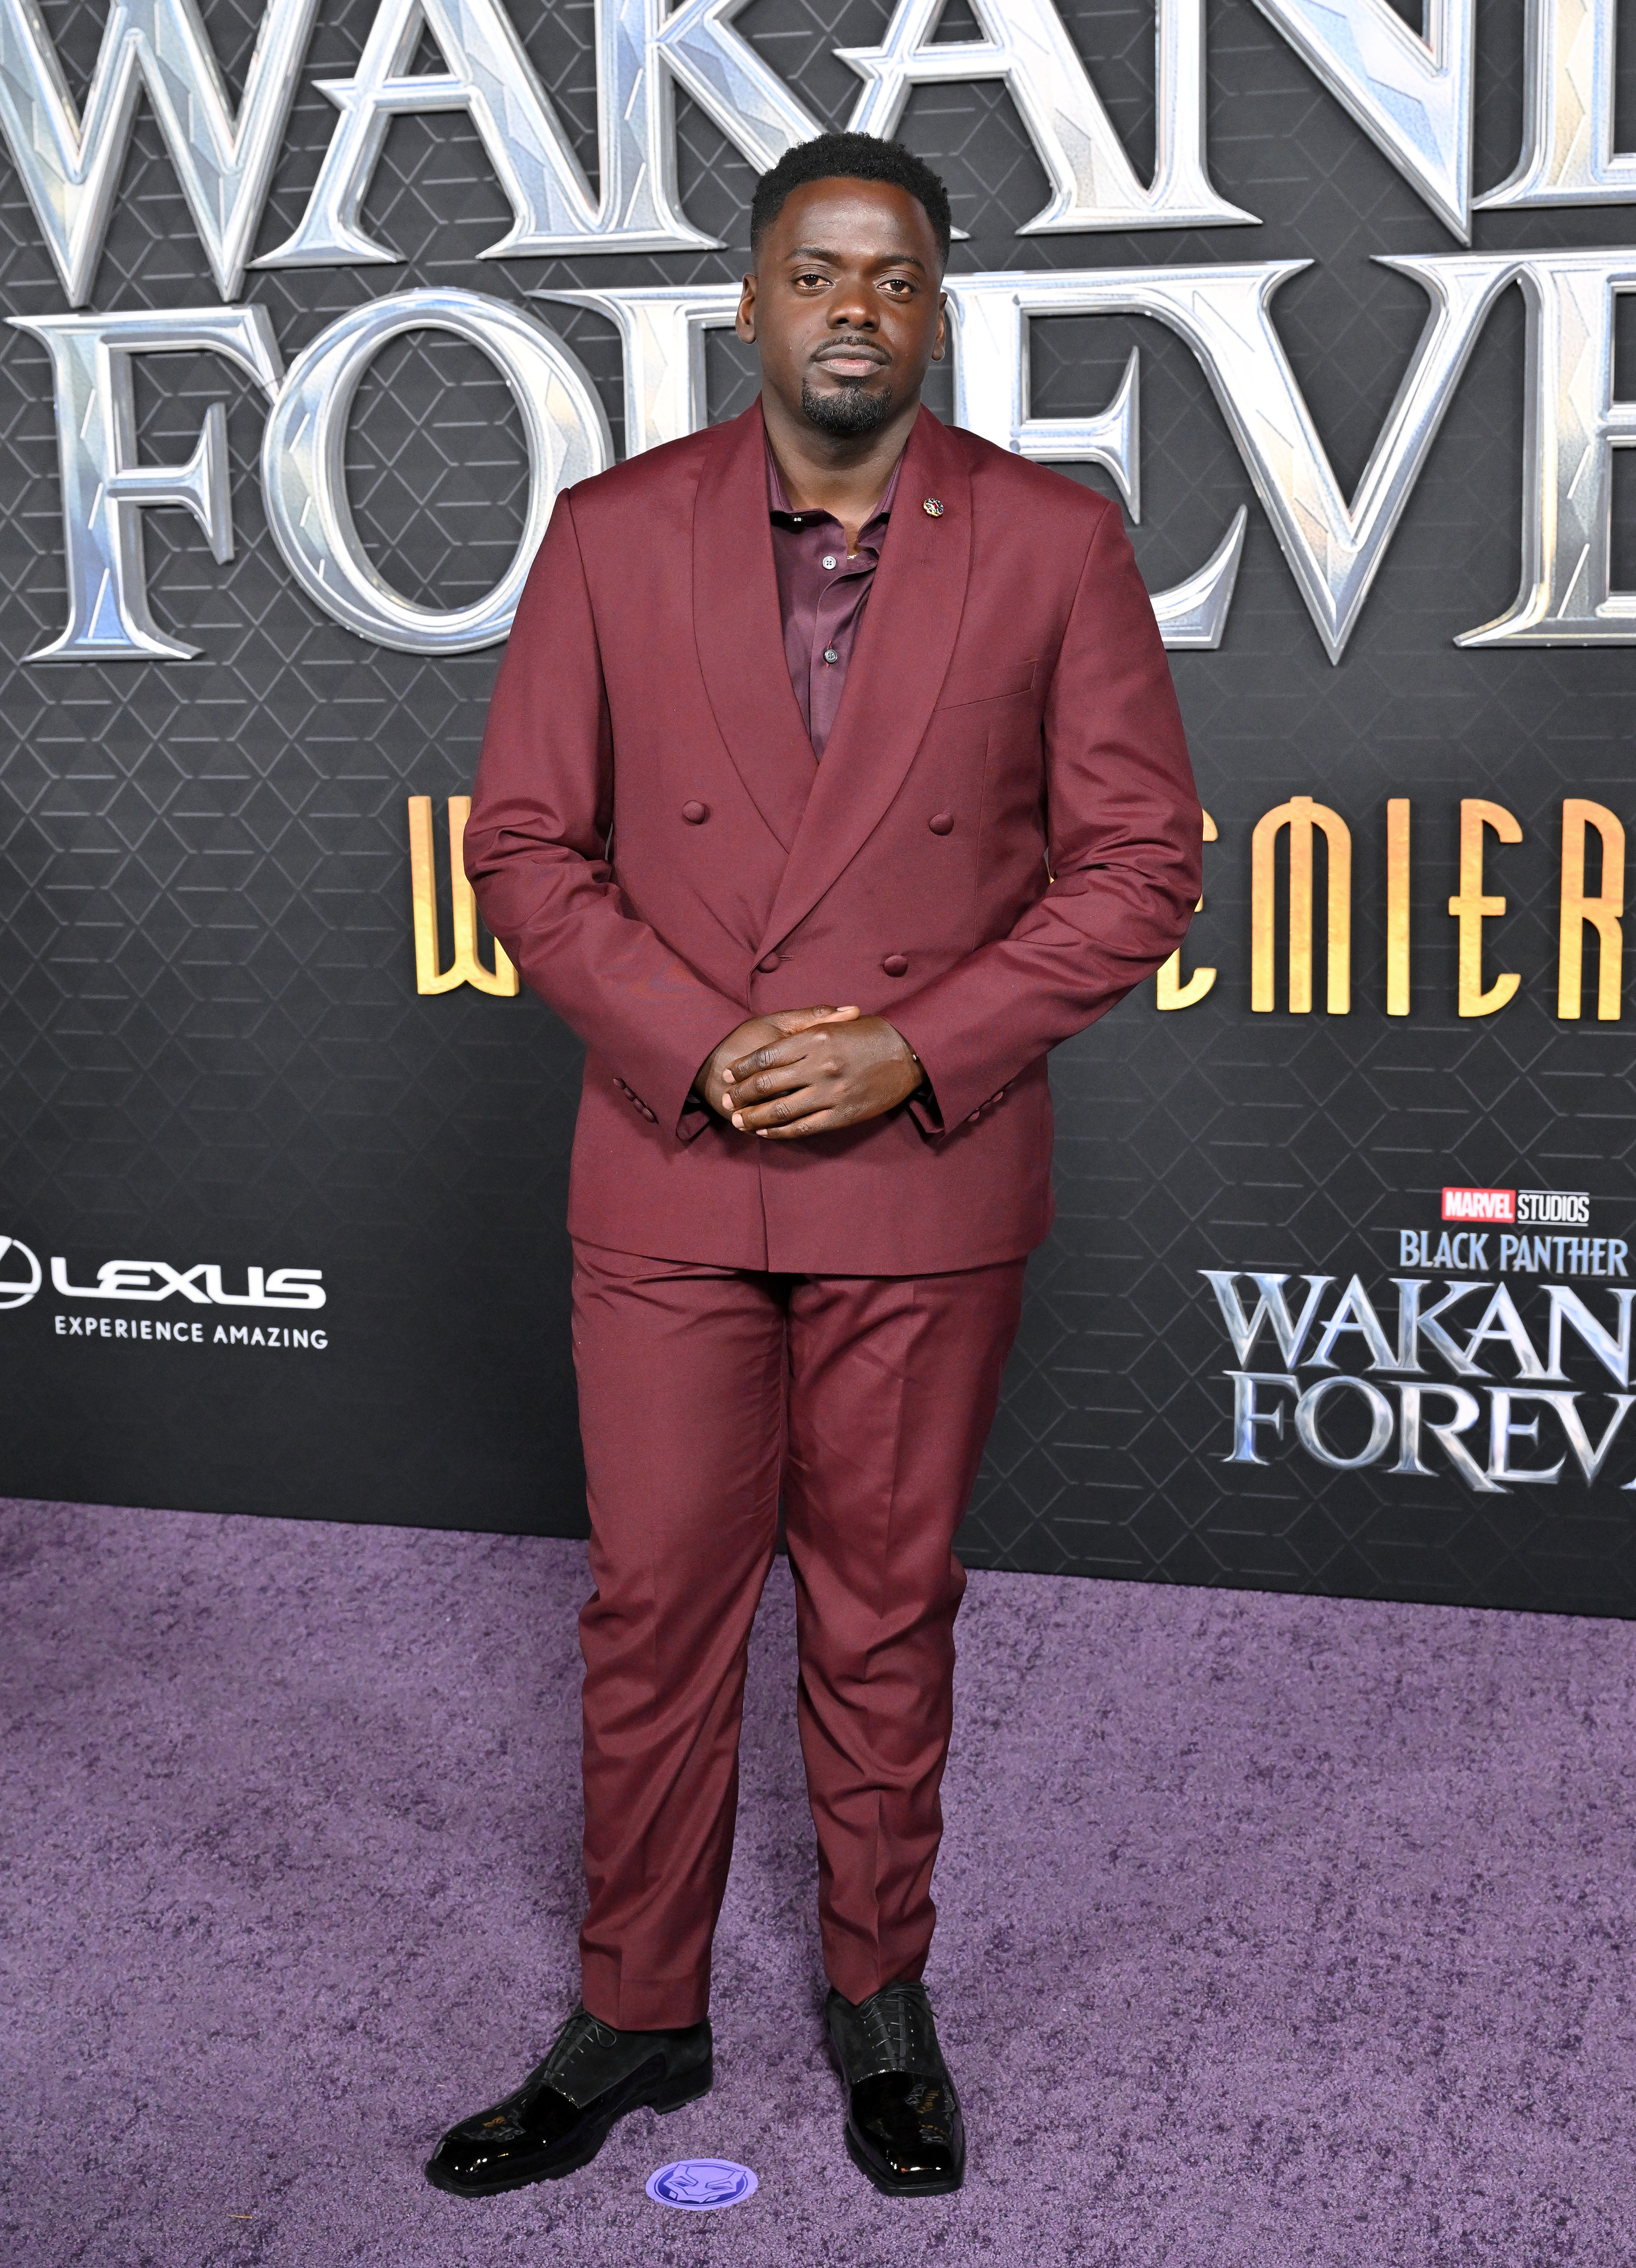 Daniel poses on the purple carpet in a monochrome suit